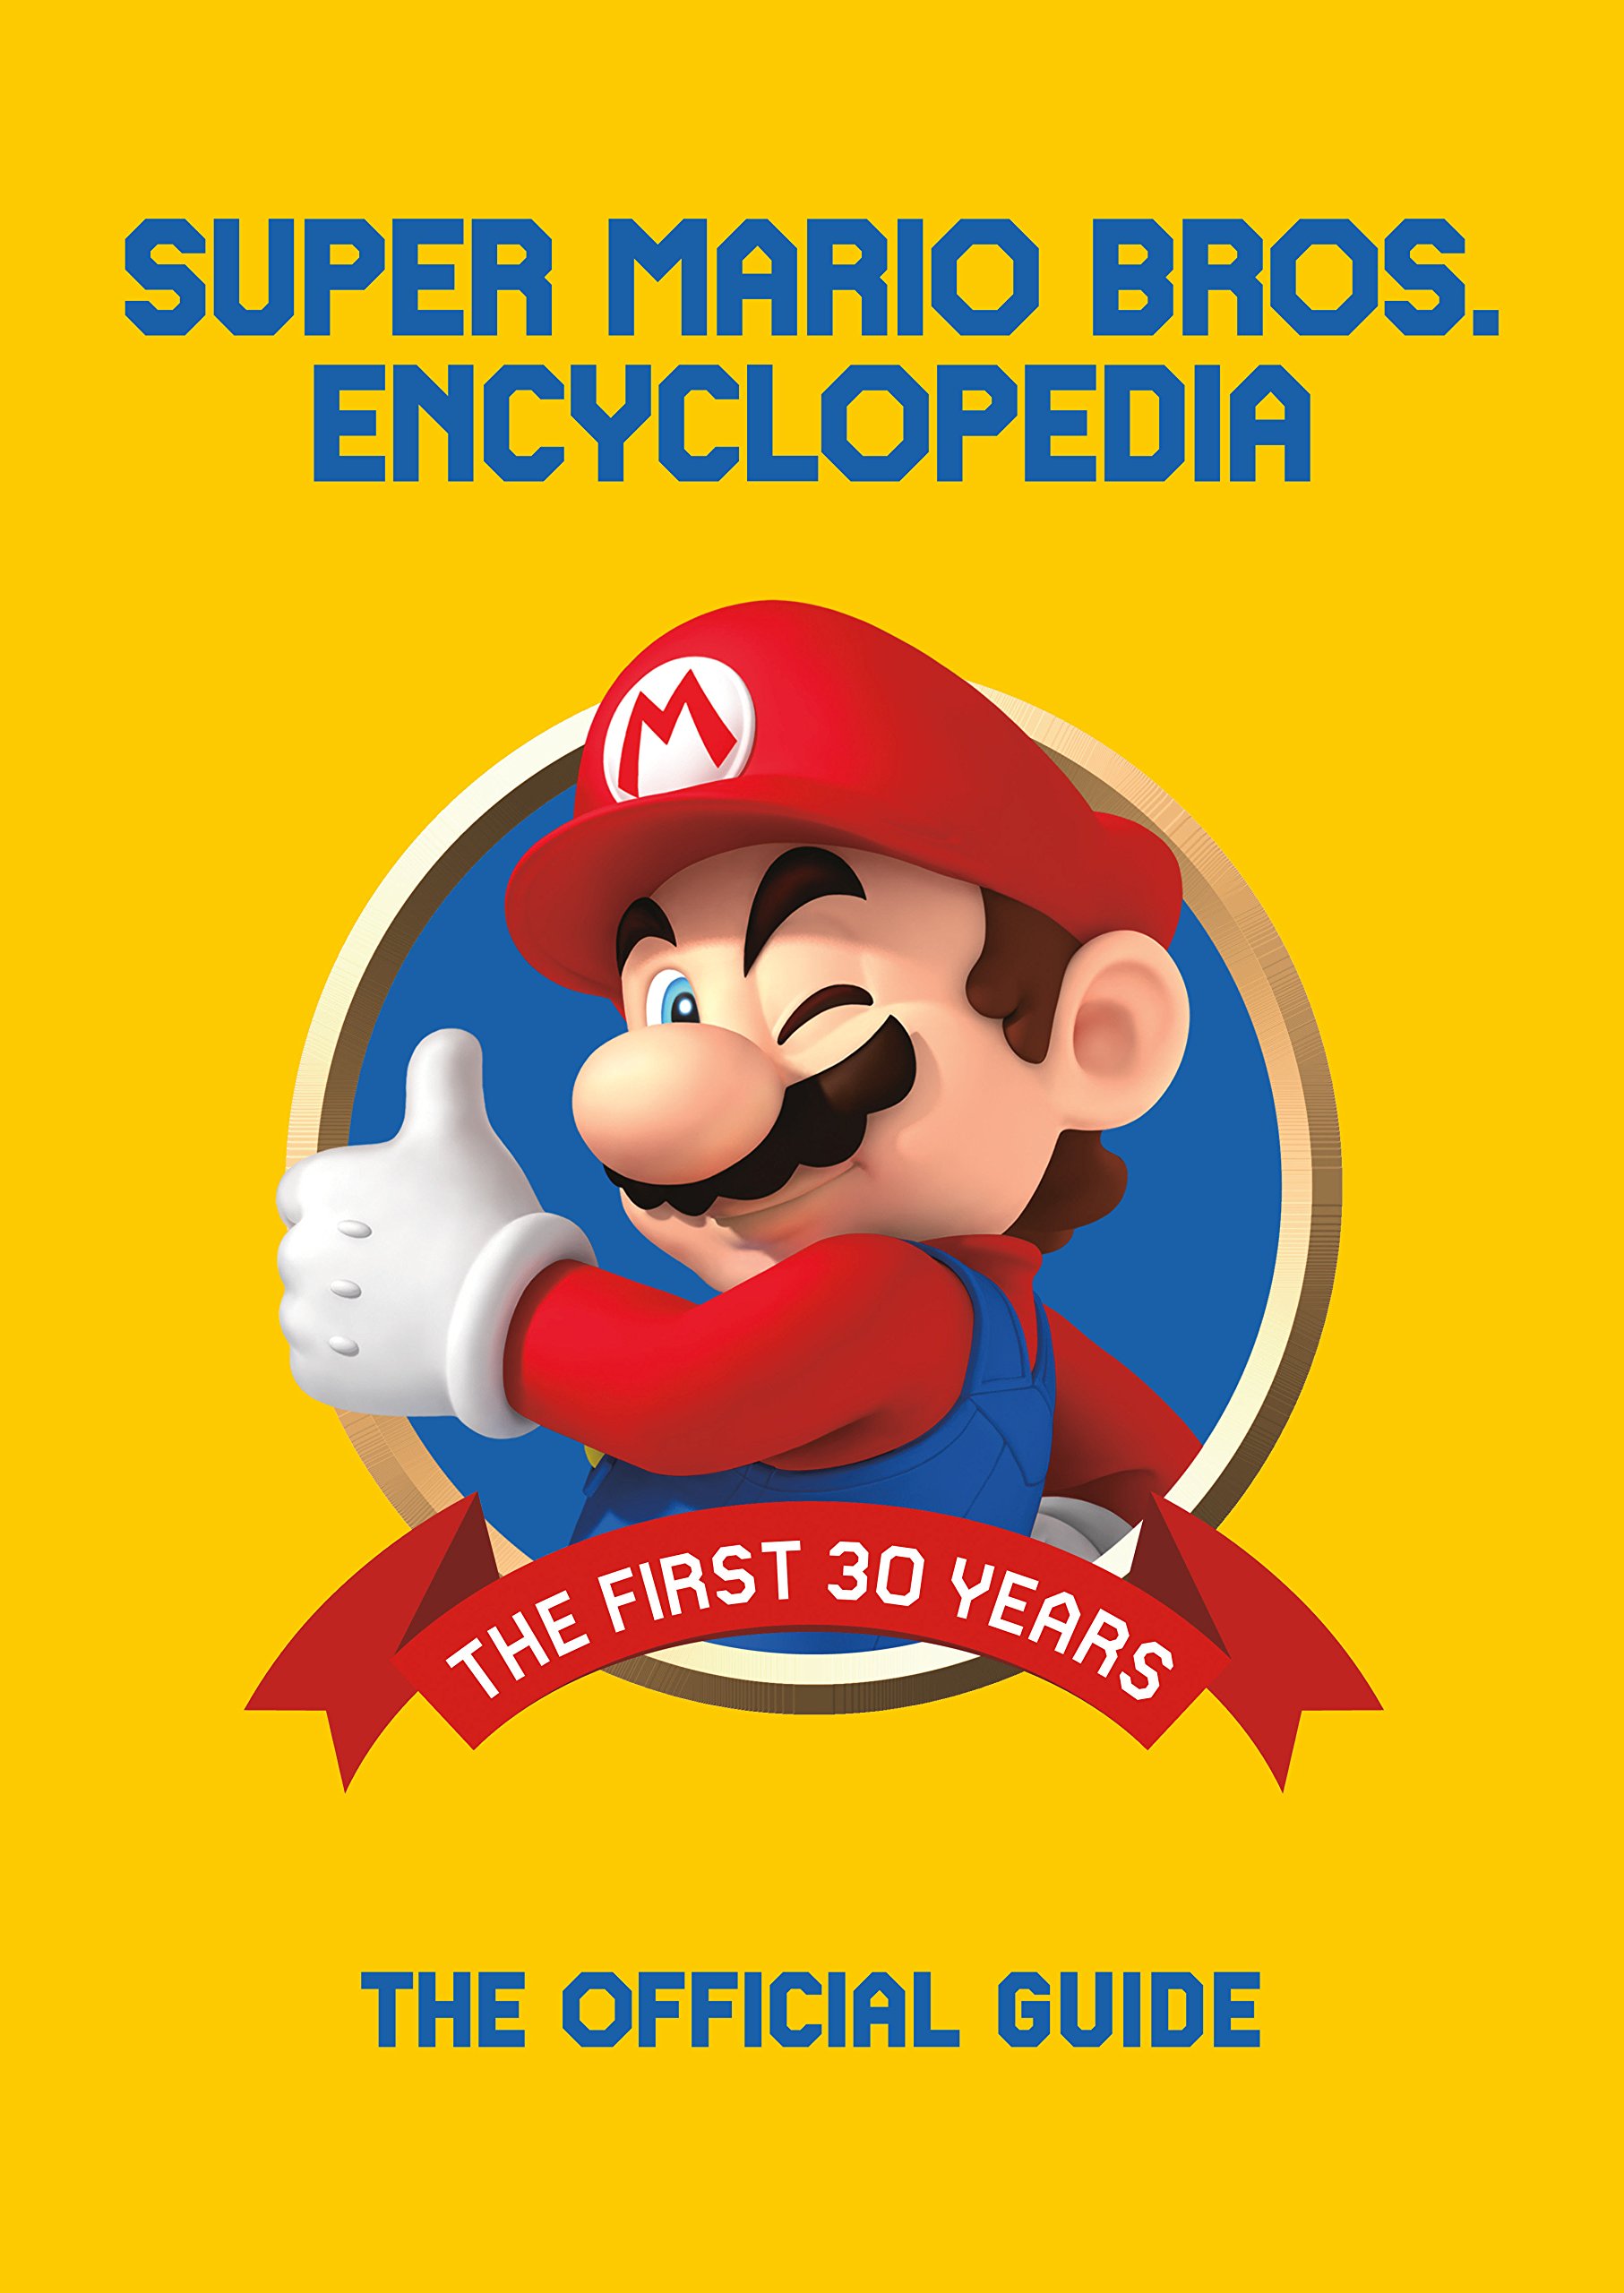 Super Mario Bros. Encyclopedia Review - Plagiarist plumbers?